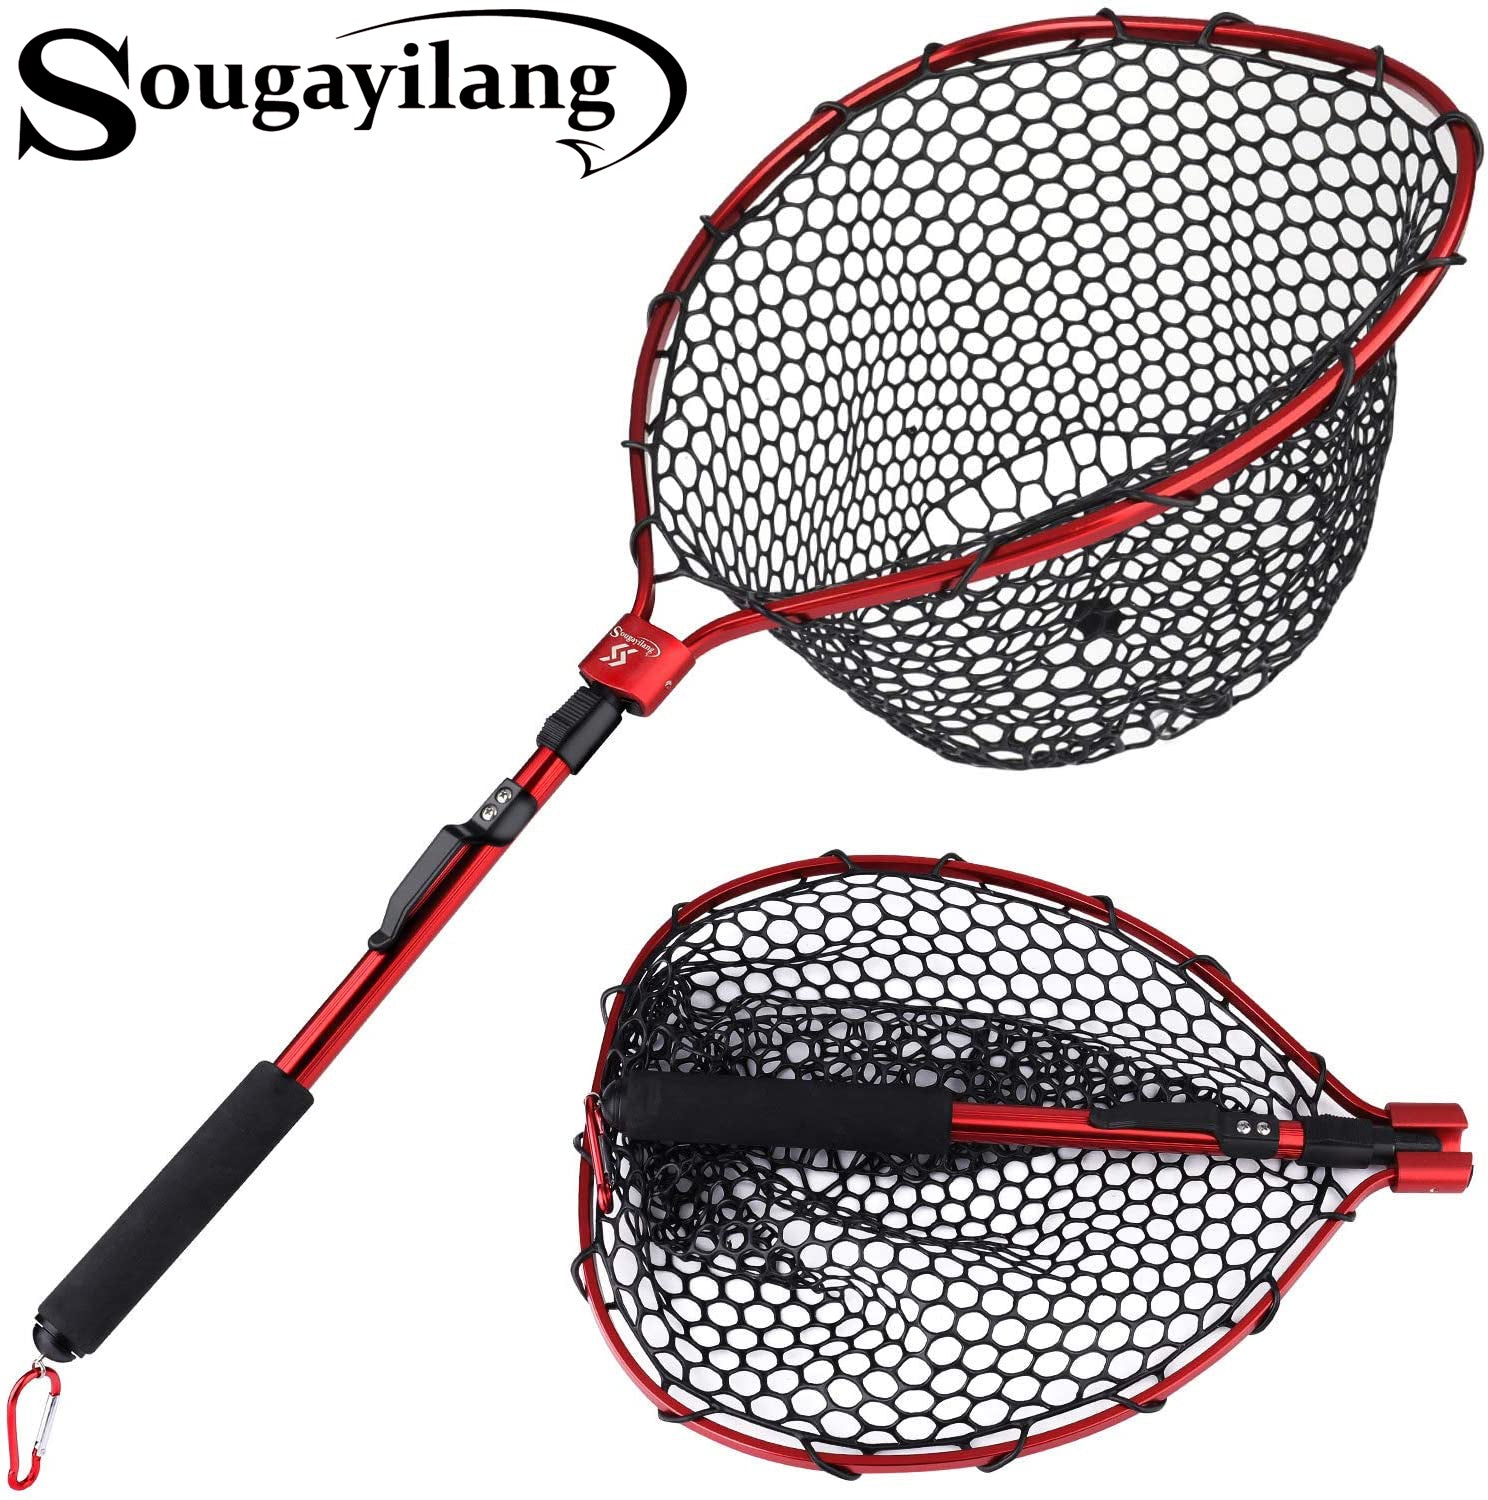 Sougayilang Fishing Net Aluminum Foldable Landing Net with Soft Rubber Mesh  EVA Handle Release Net for Fly, Trout, Salmon, Bass, Kayak Fishing